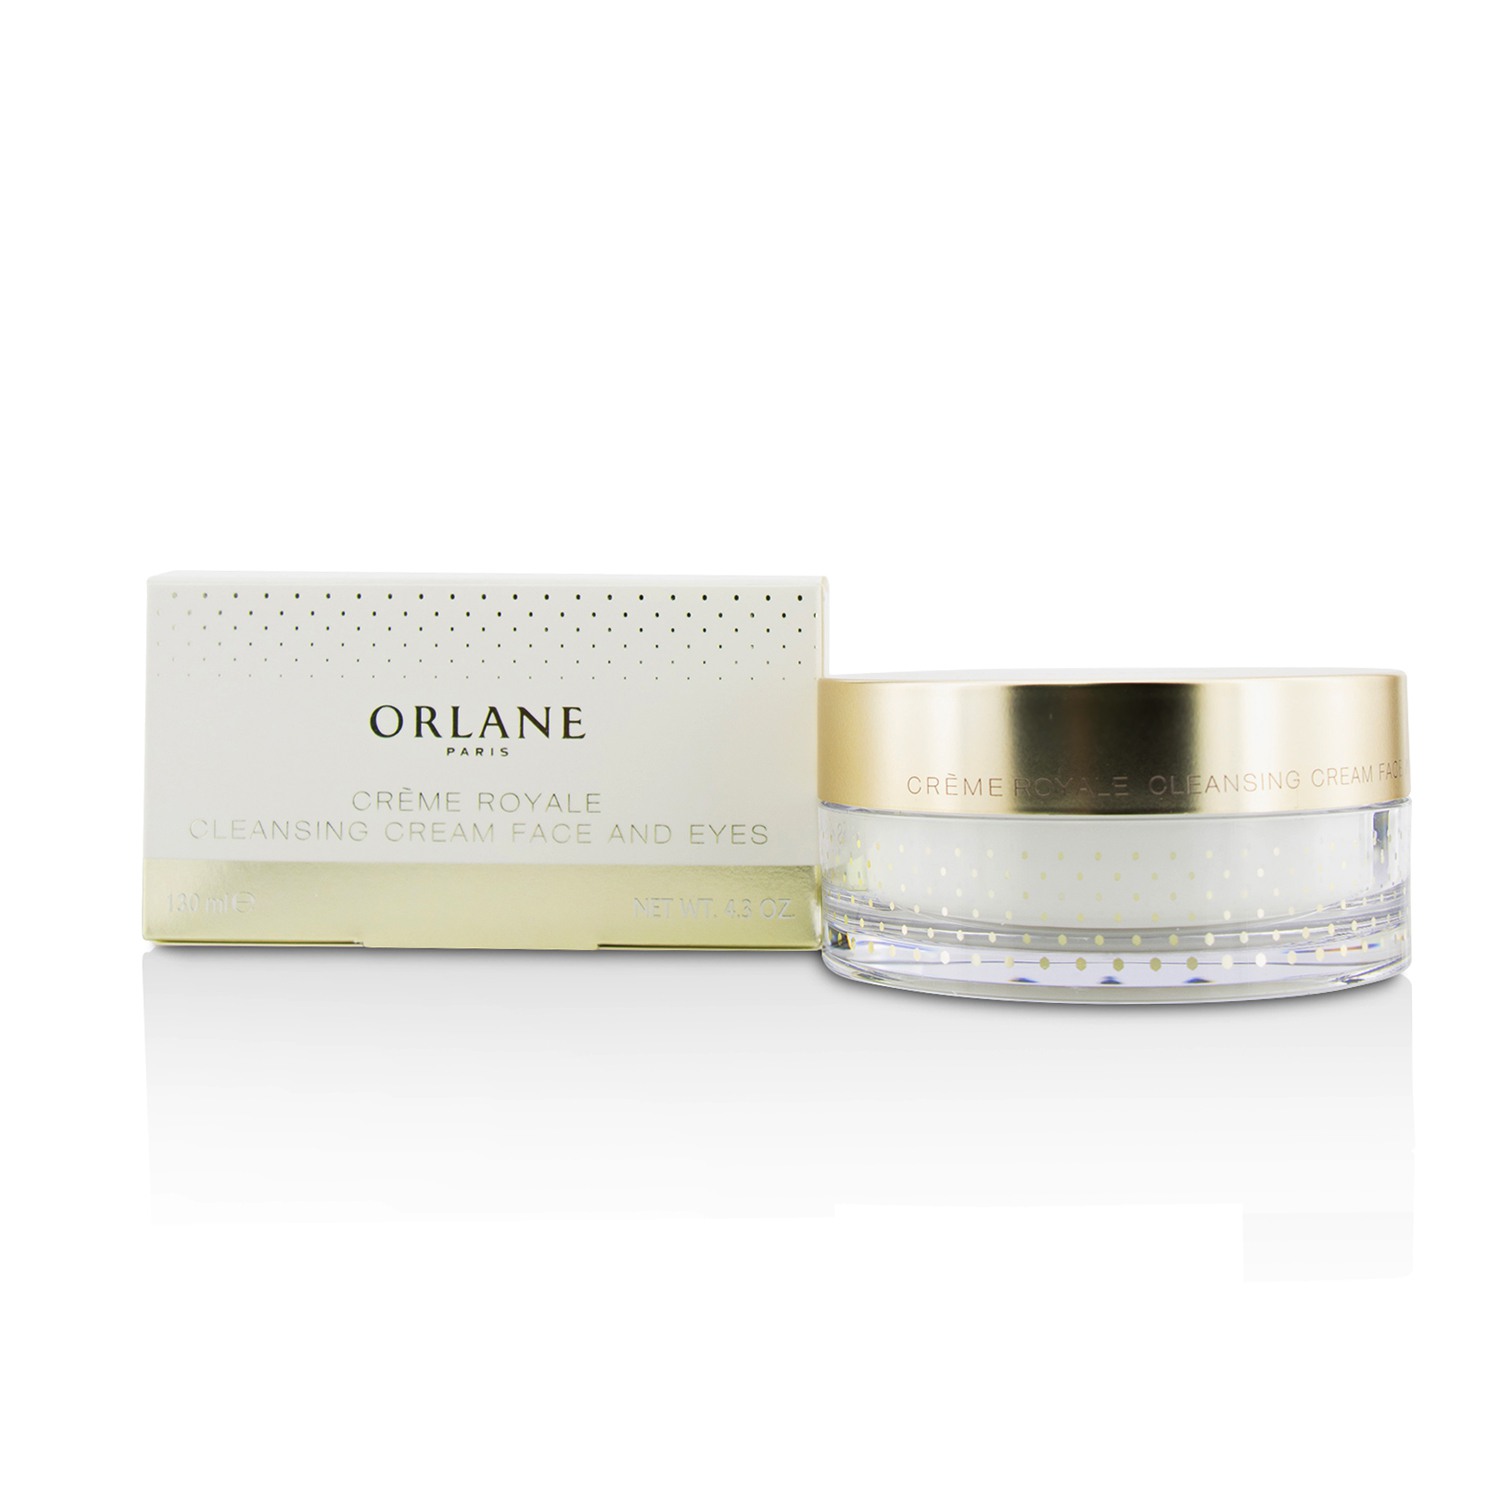 Creme Royale Cleansing Cream Face & Eyes Orlane Image